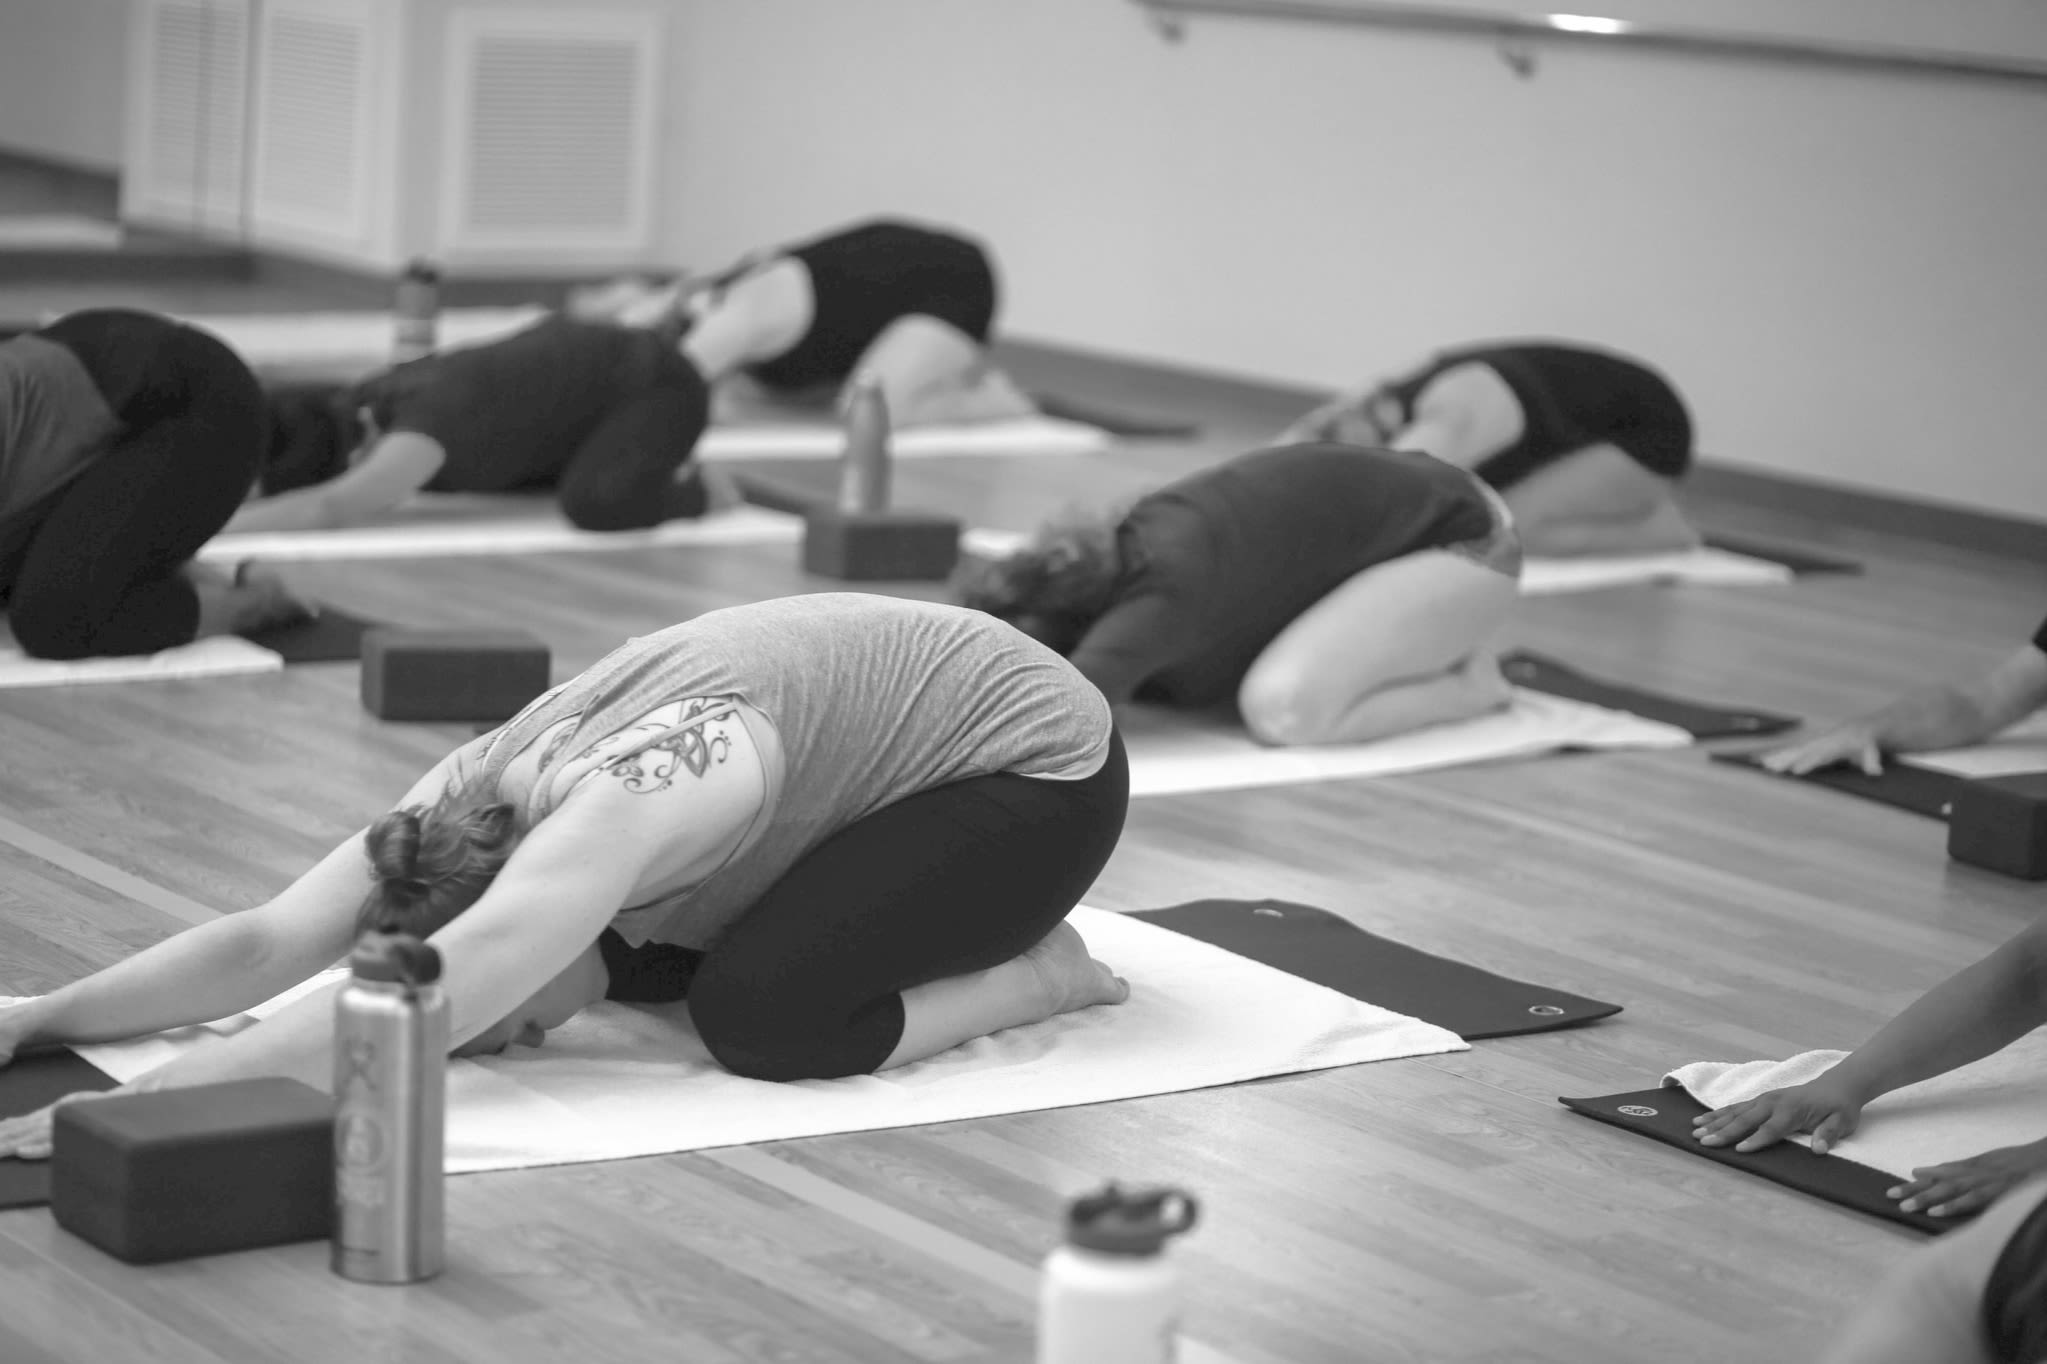 Bikram Yoga North Texas - Grapevine: Read Reviews and Book Classes